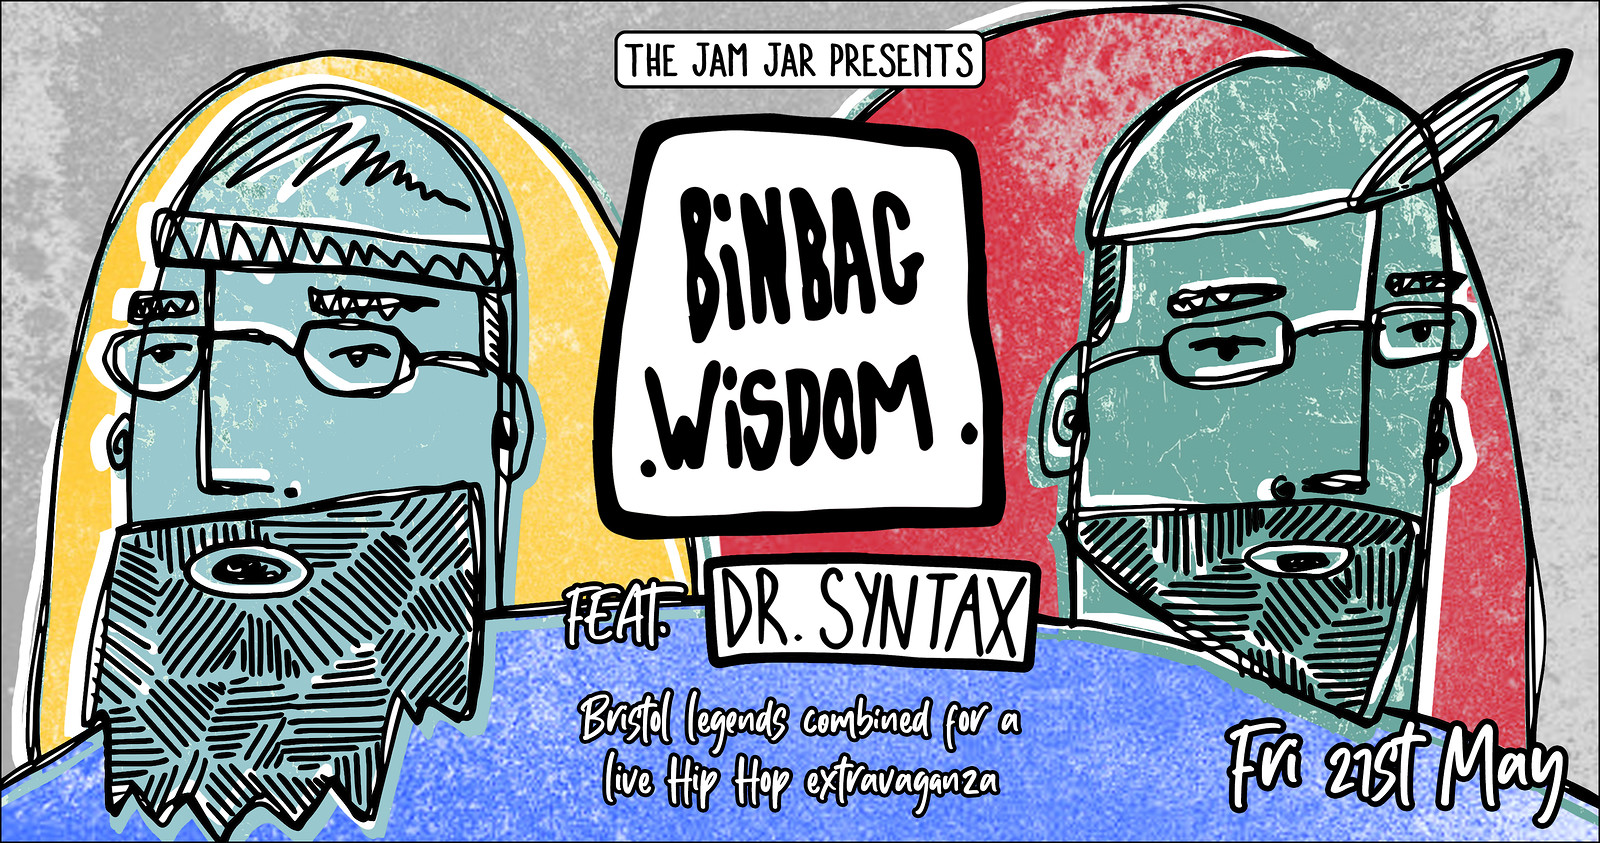 Binbag Wisdom featuring Dr. Syntax at Jam Jar